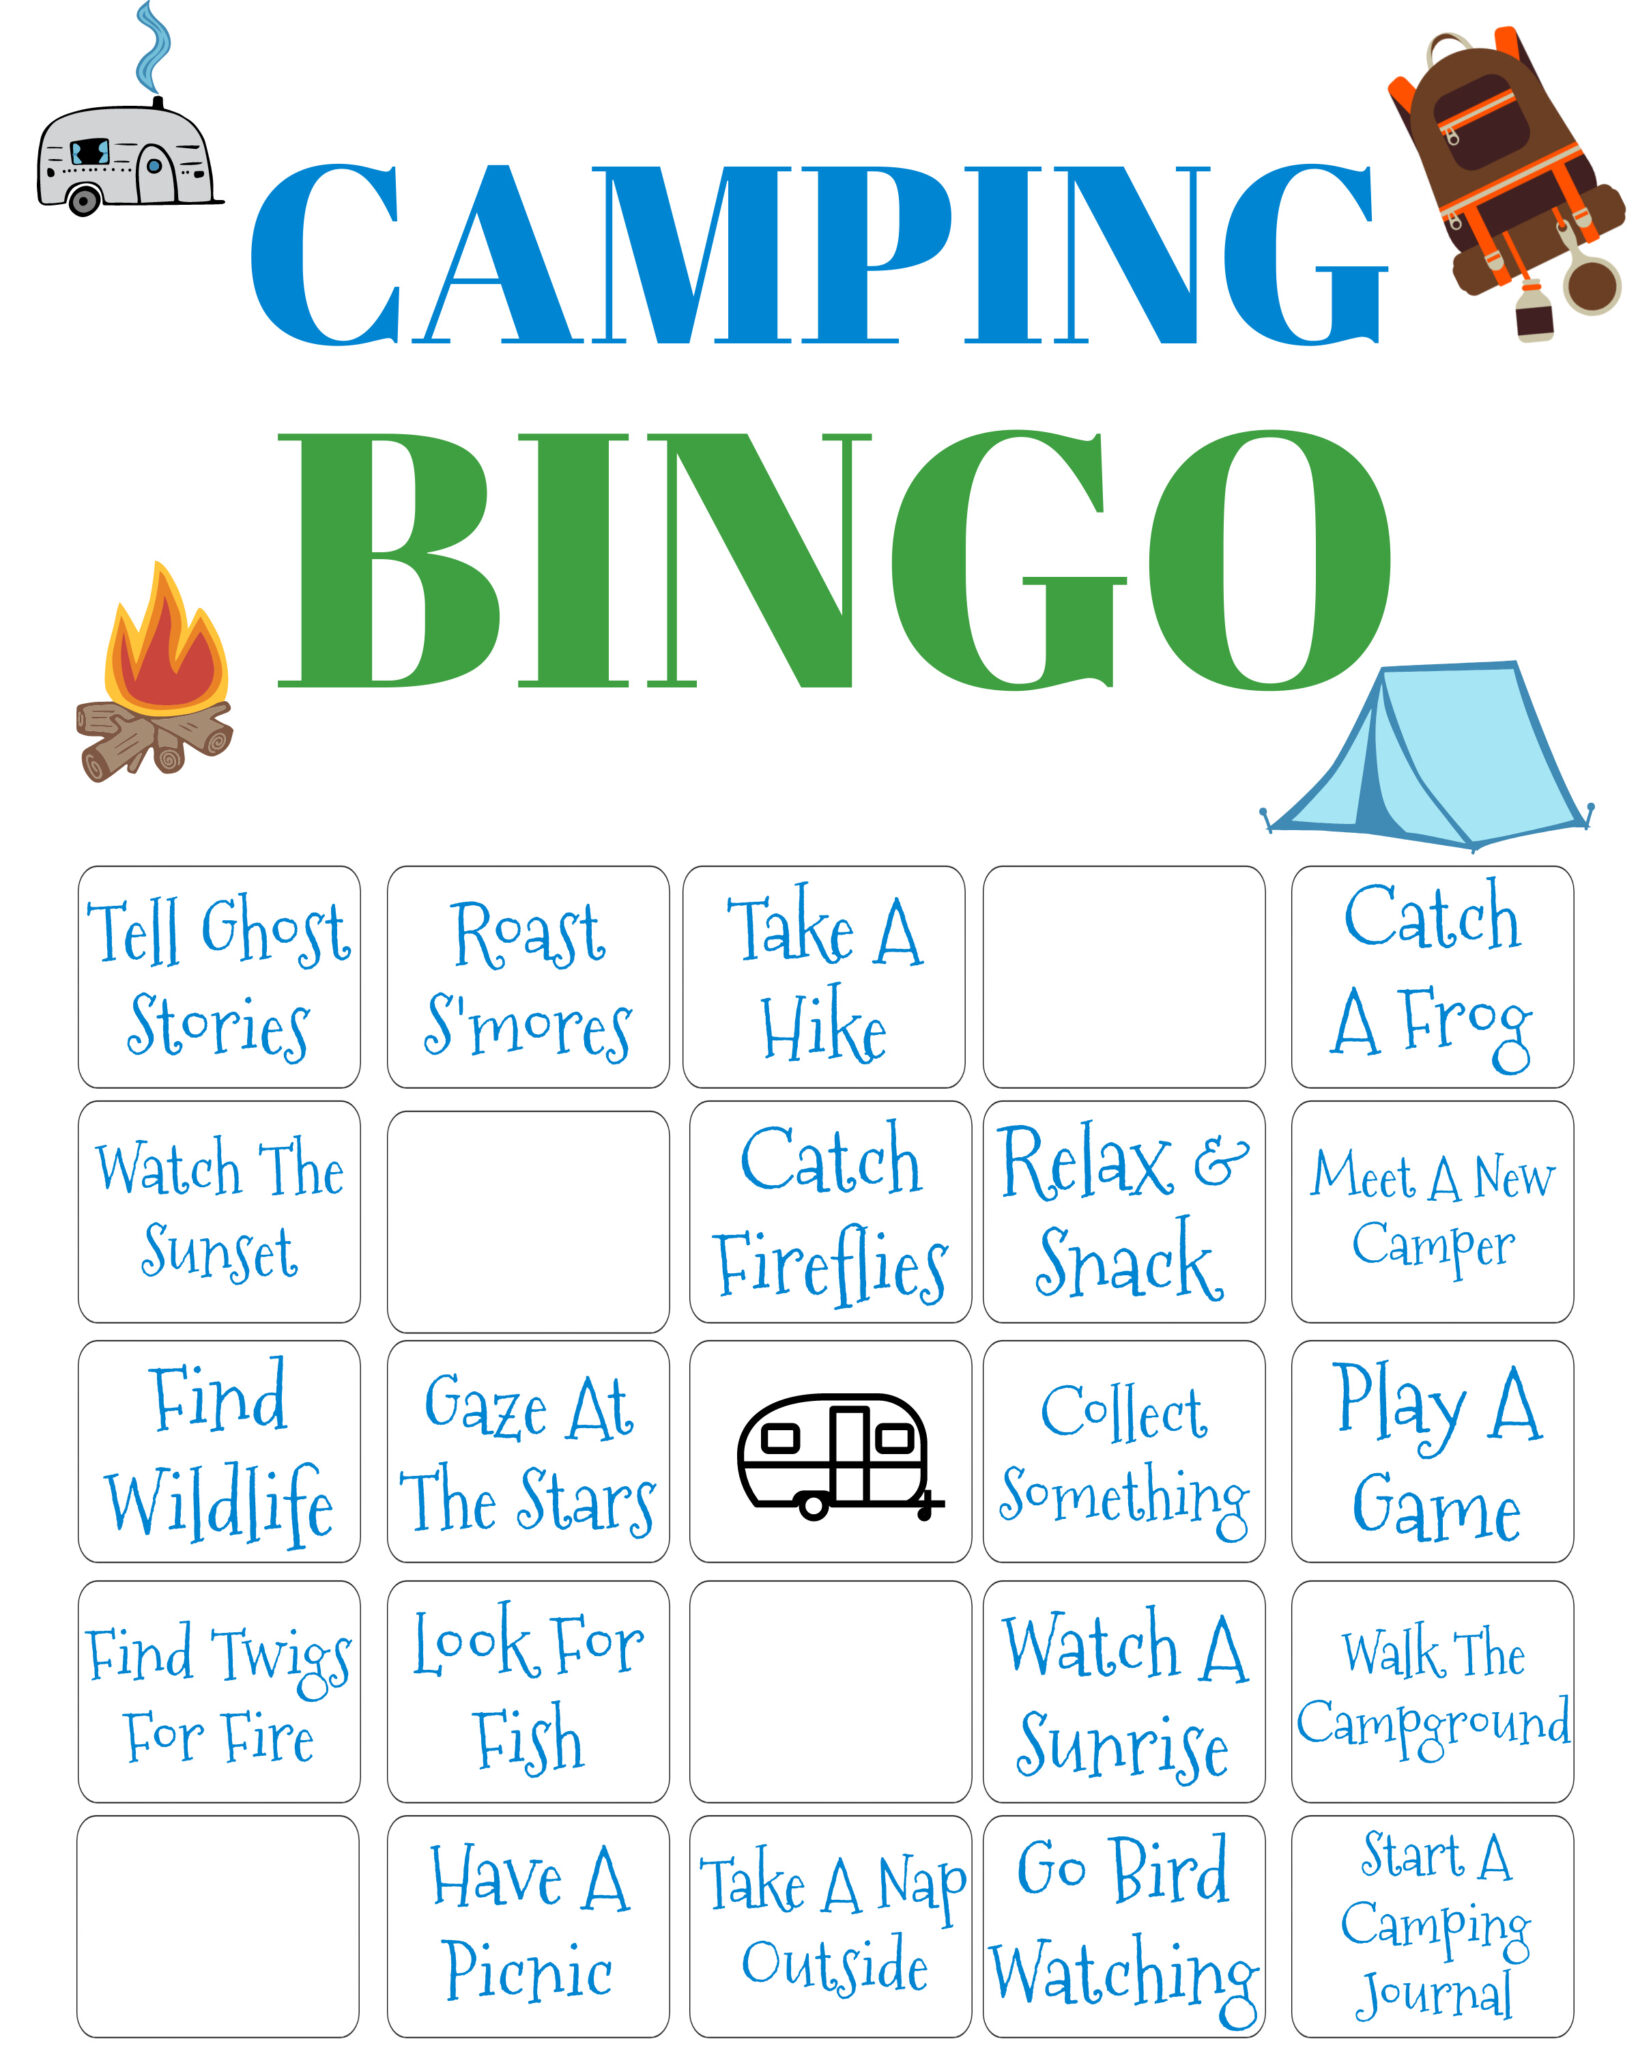 camping-bingo-for-kids-fun-camping-activities